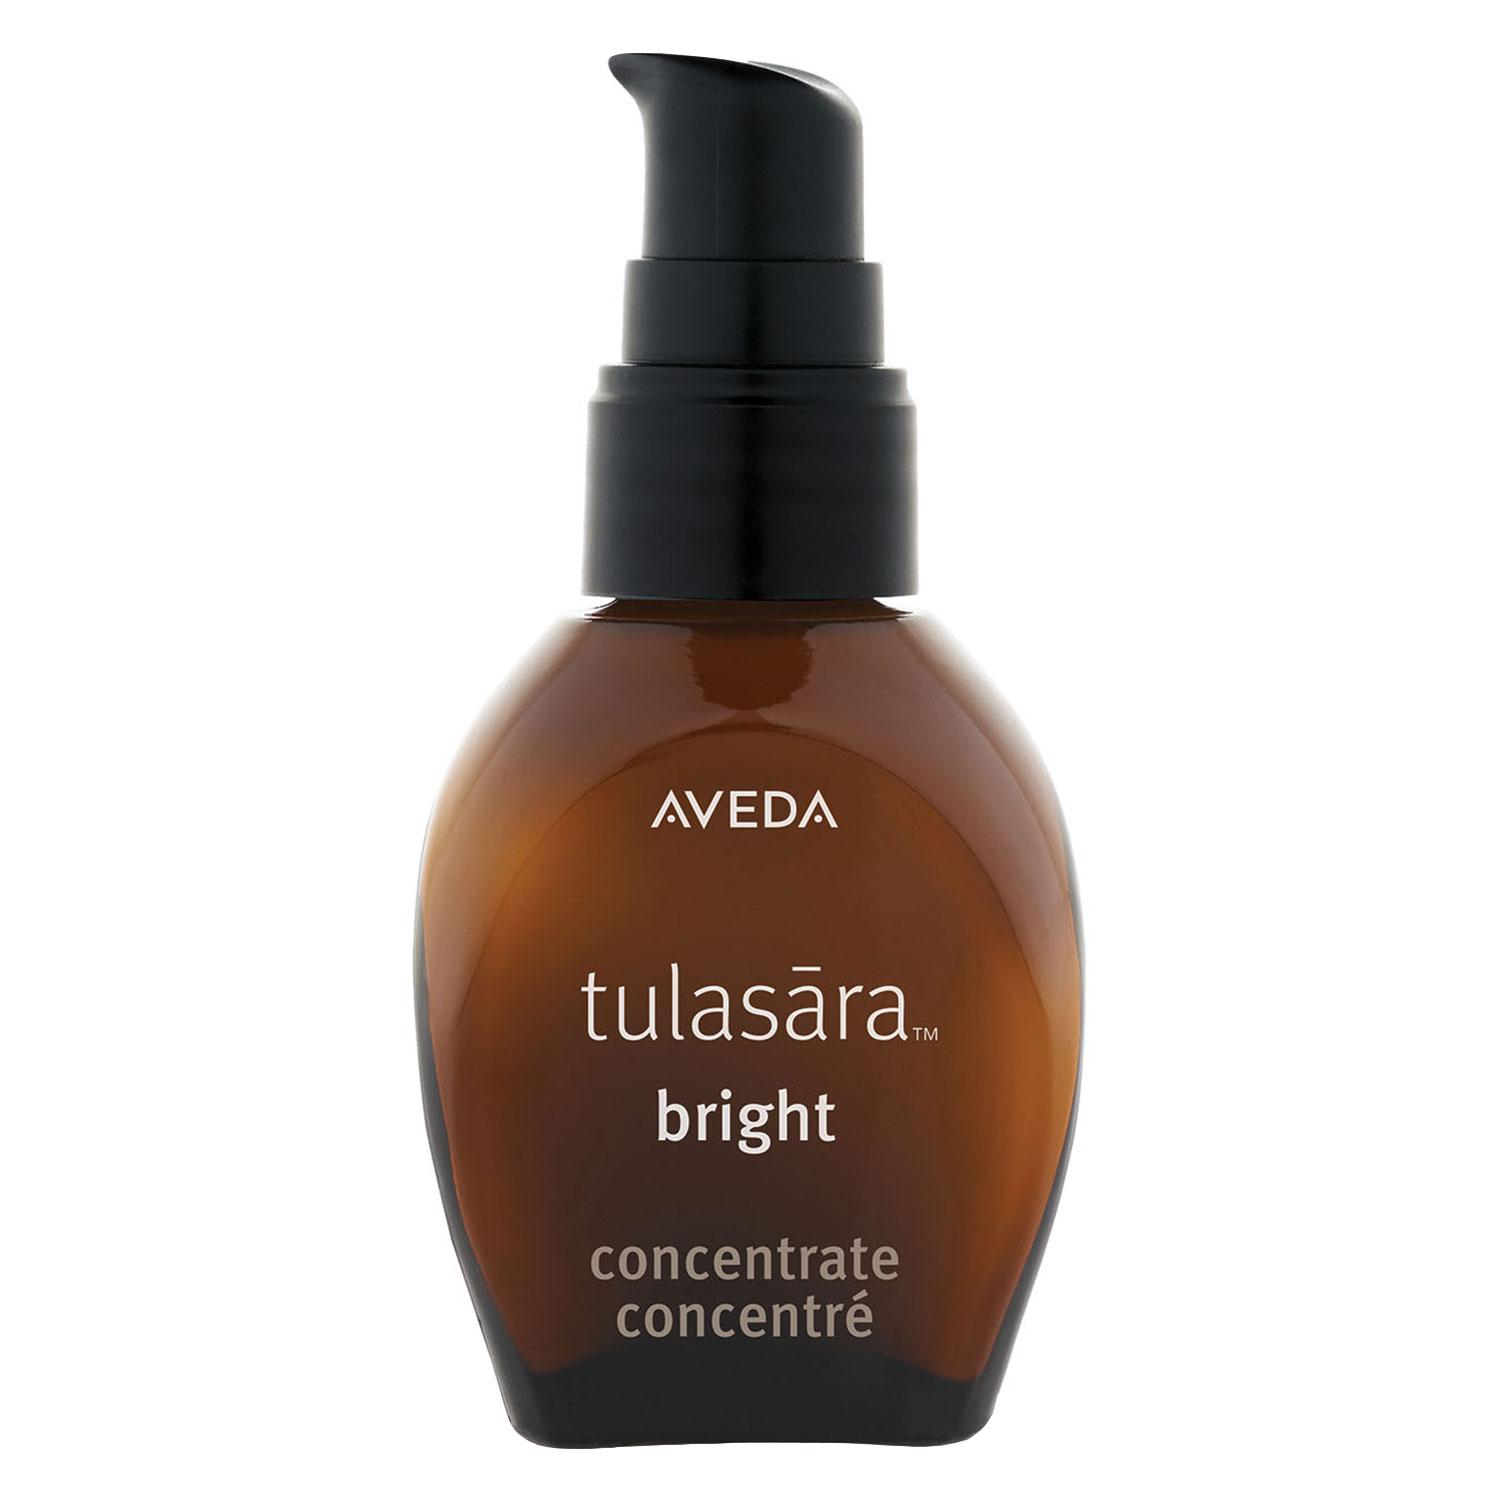 tulasara - bright concentrate